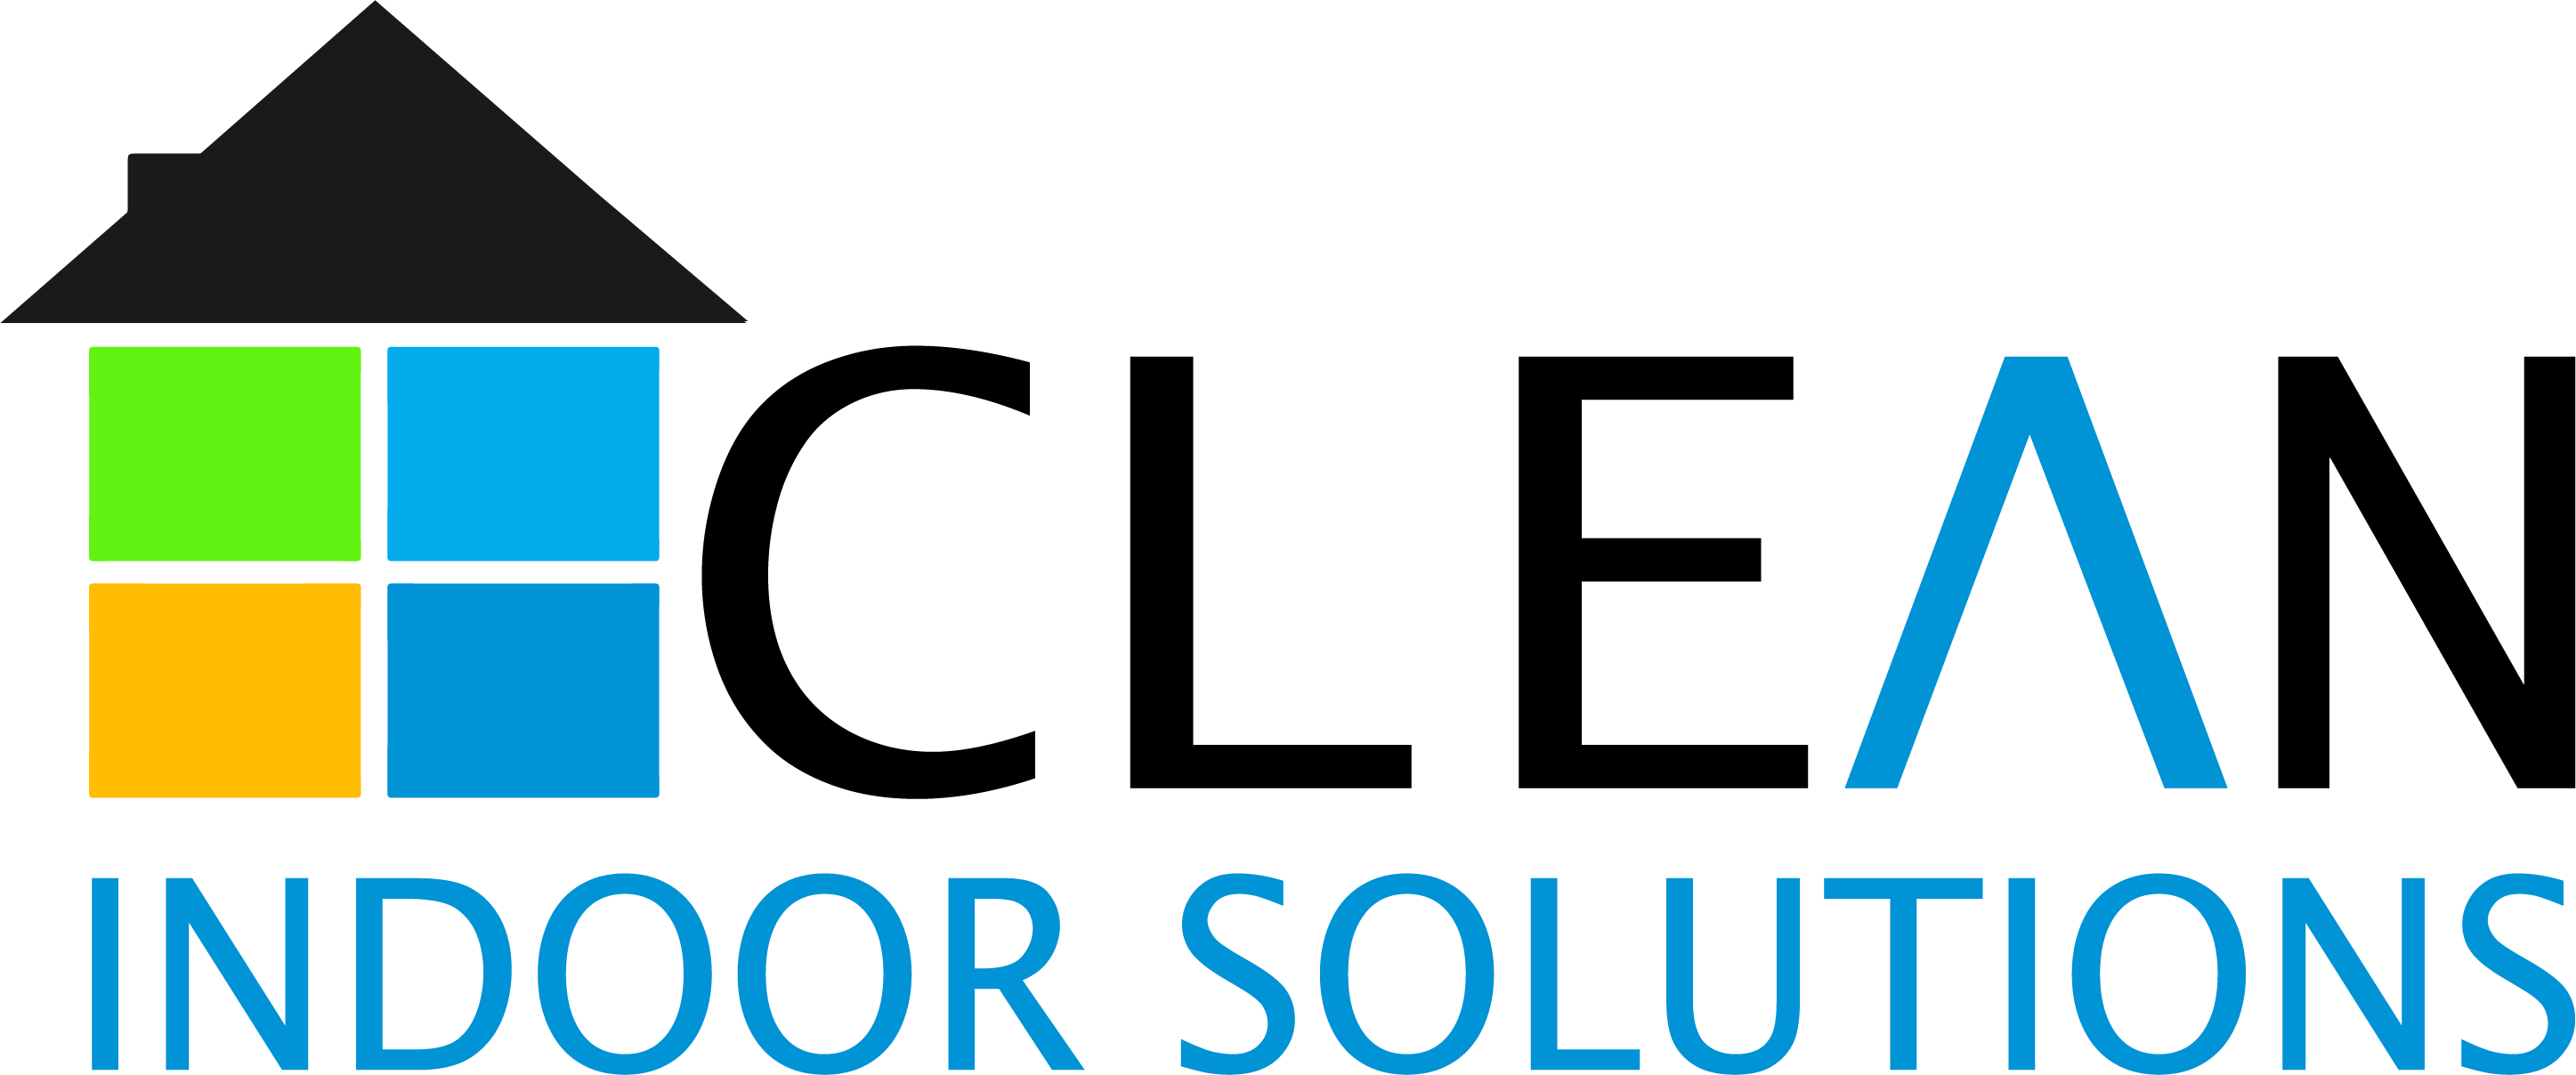 Tiger Pro Services LLC Logo